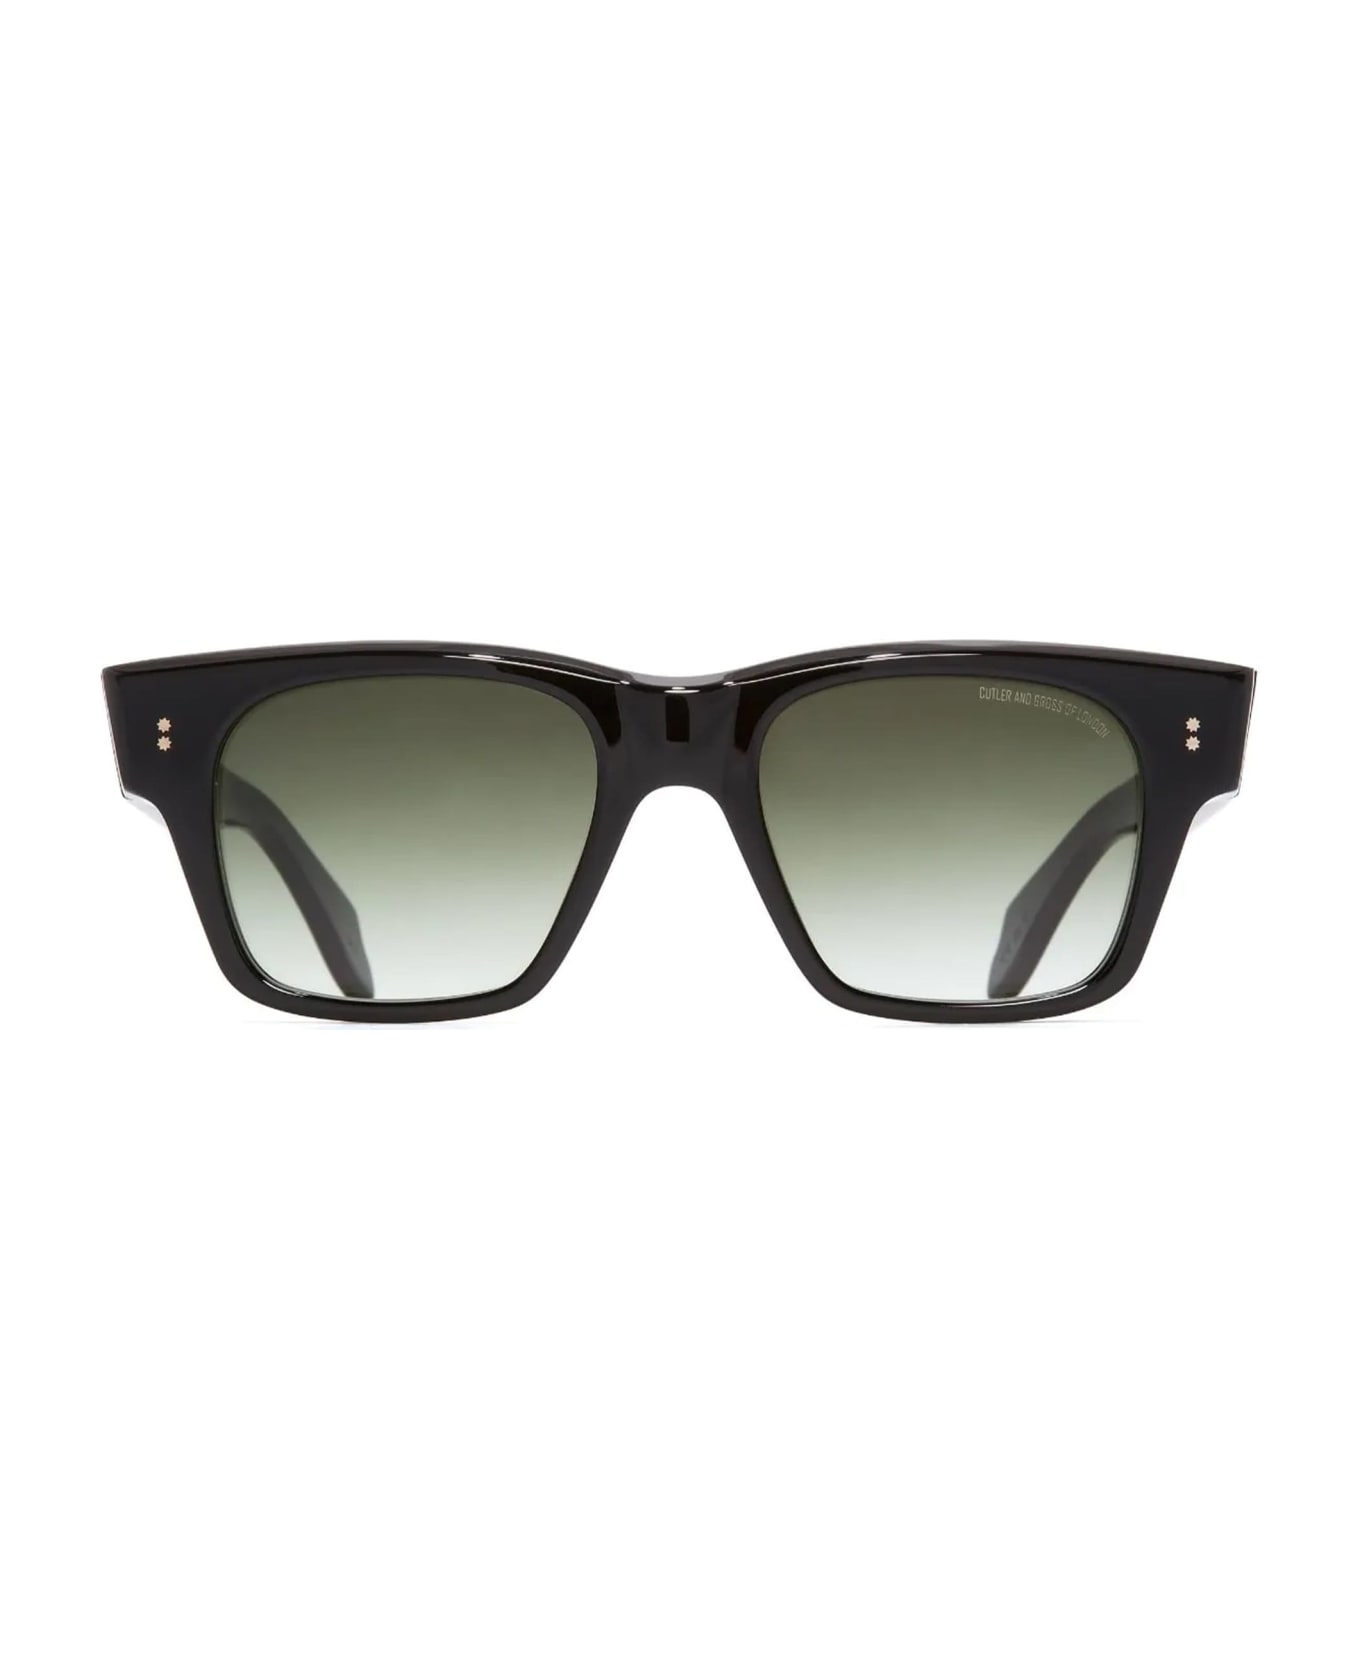 Cutler and Gross 9690 / Black Sunglasses - Black サングラス